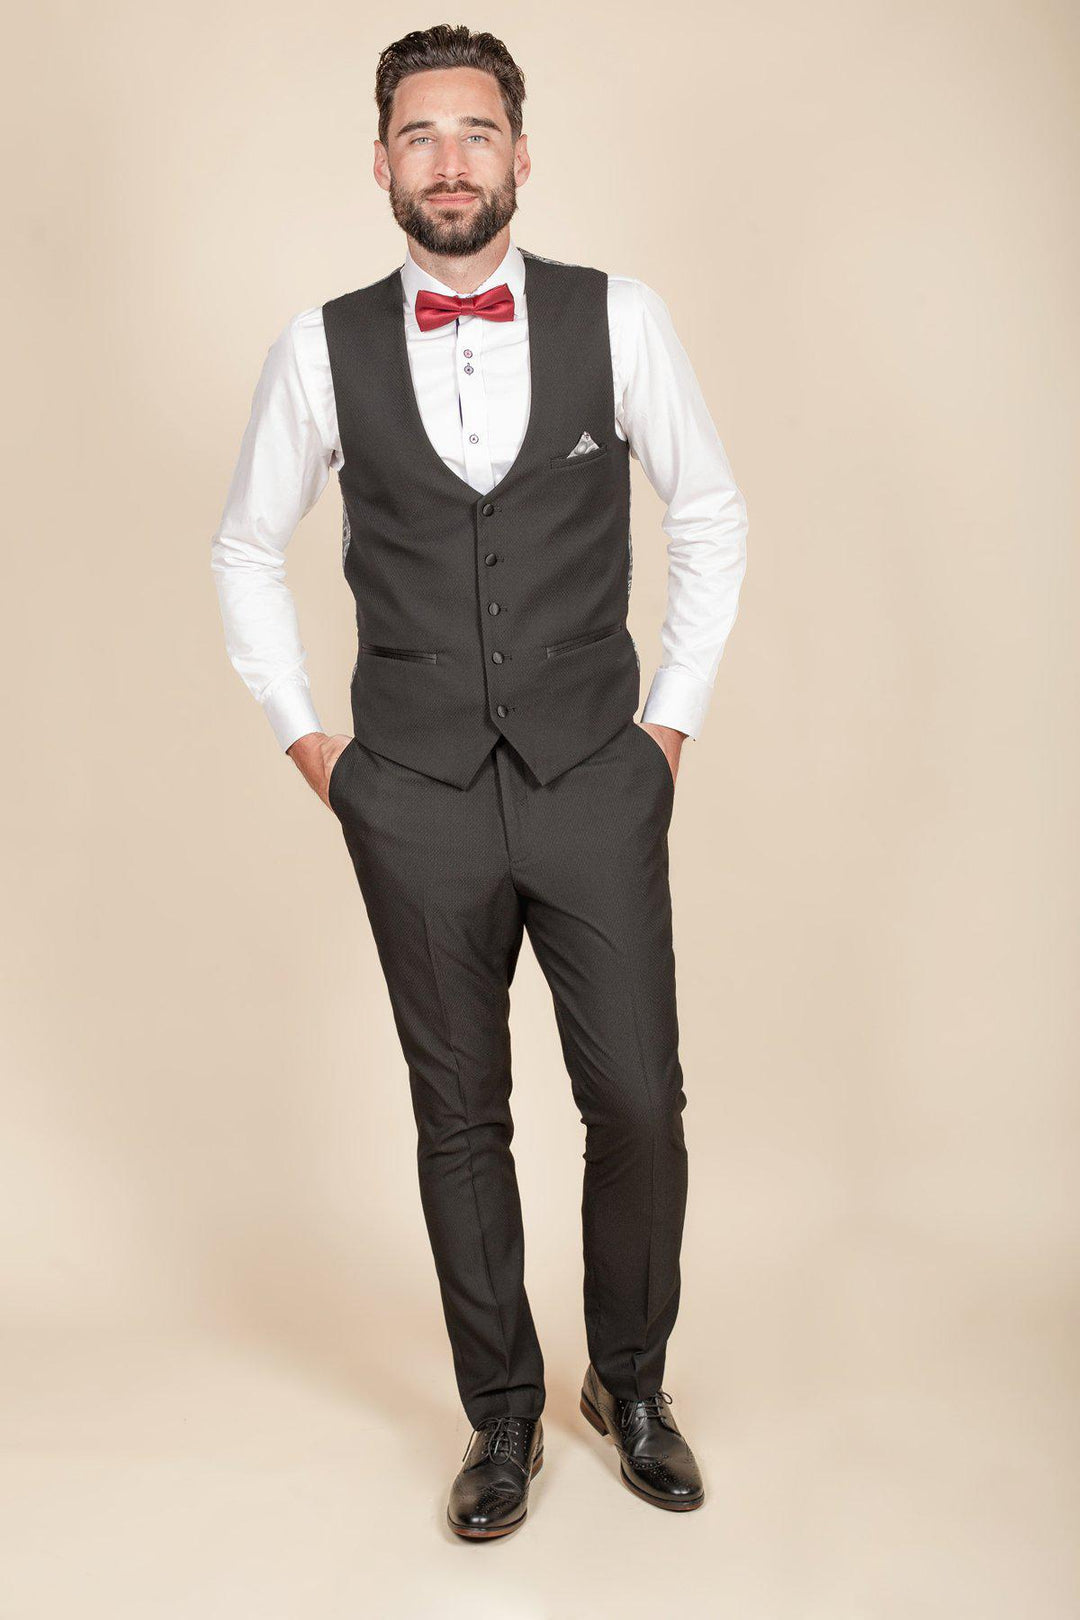 DALTON - Black Tux Lapel Diamond Three Piece Suit